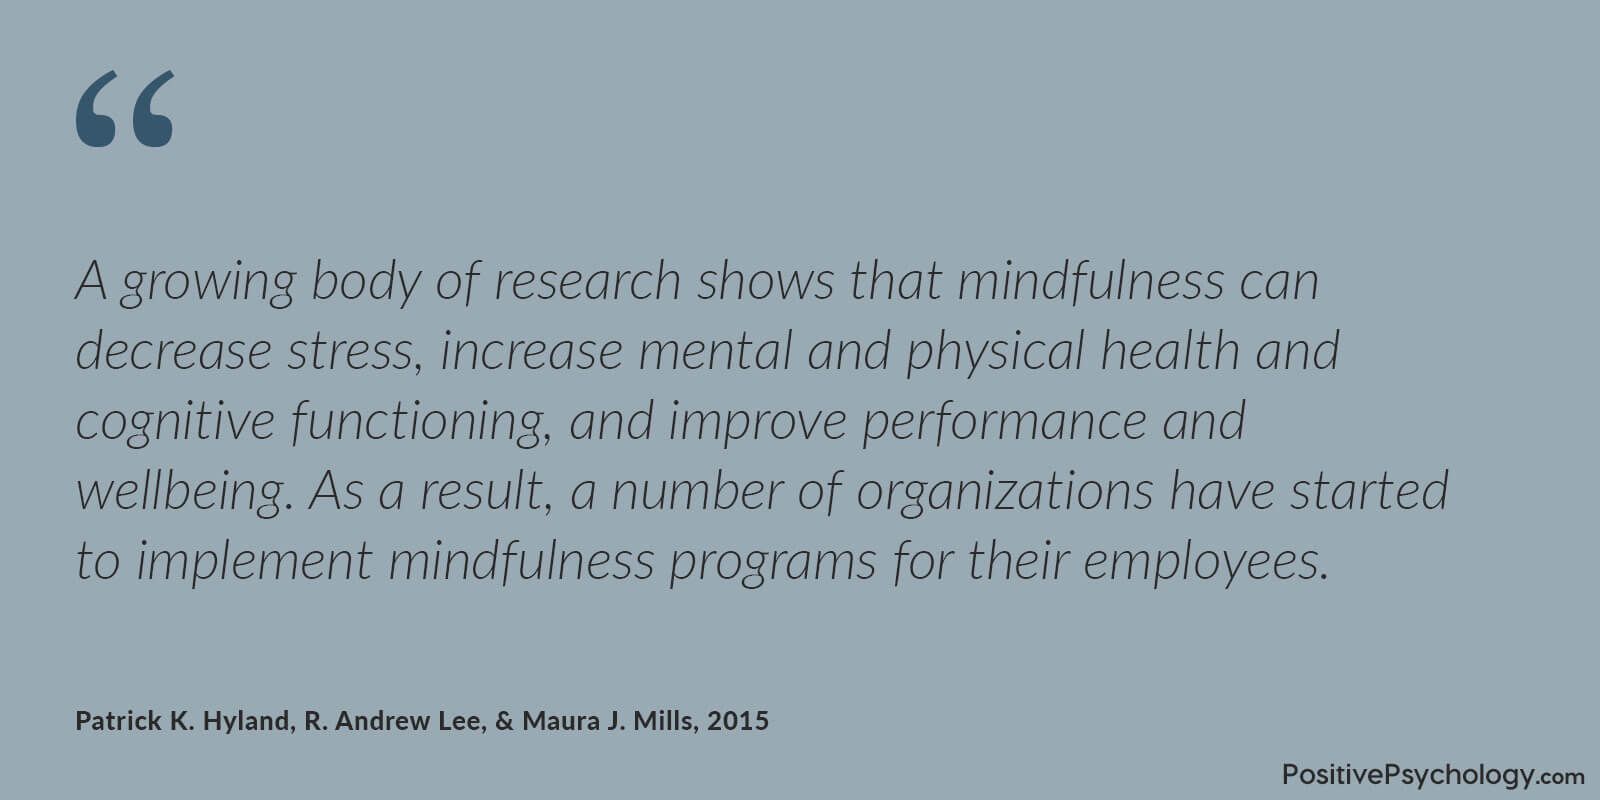 Mindfulness can decrease stress